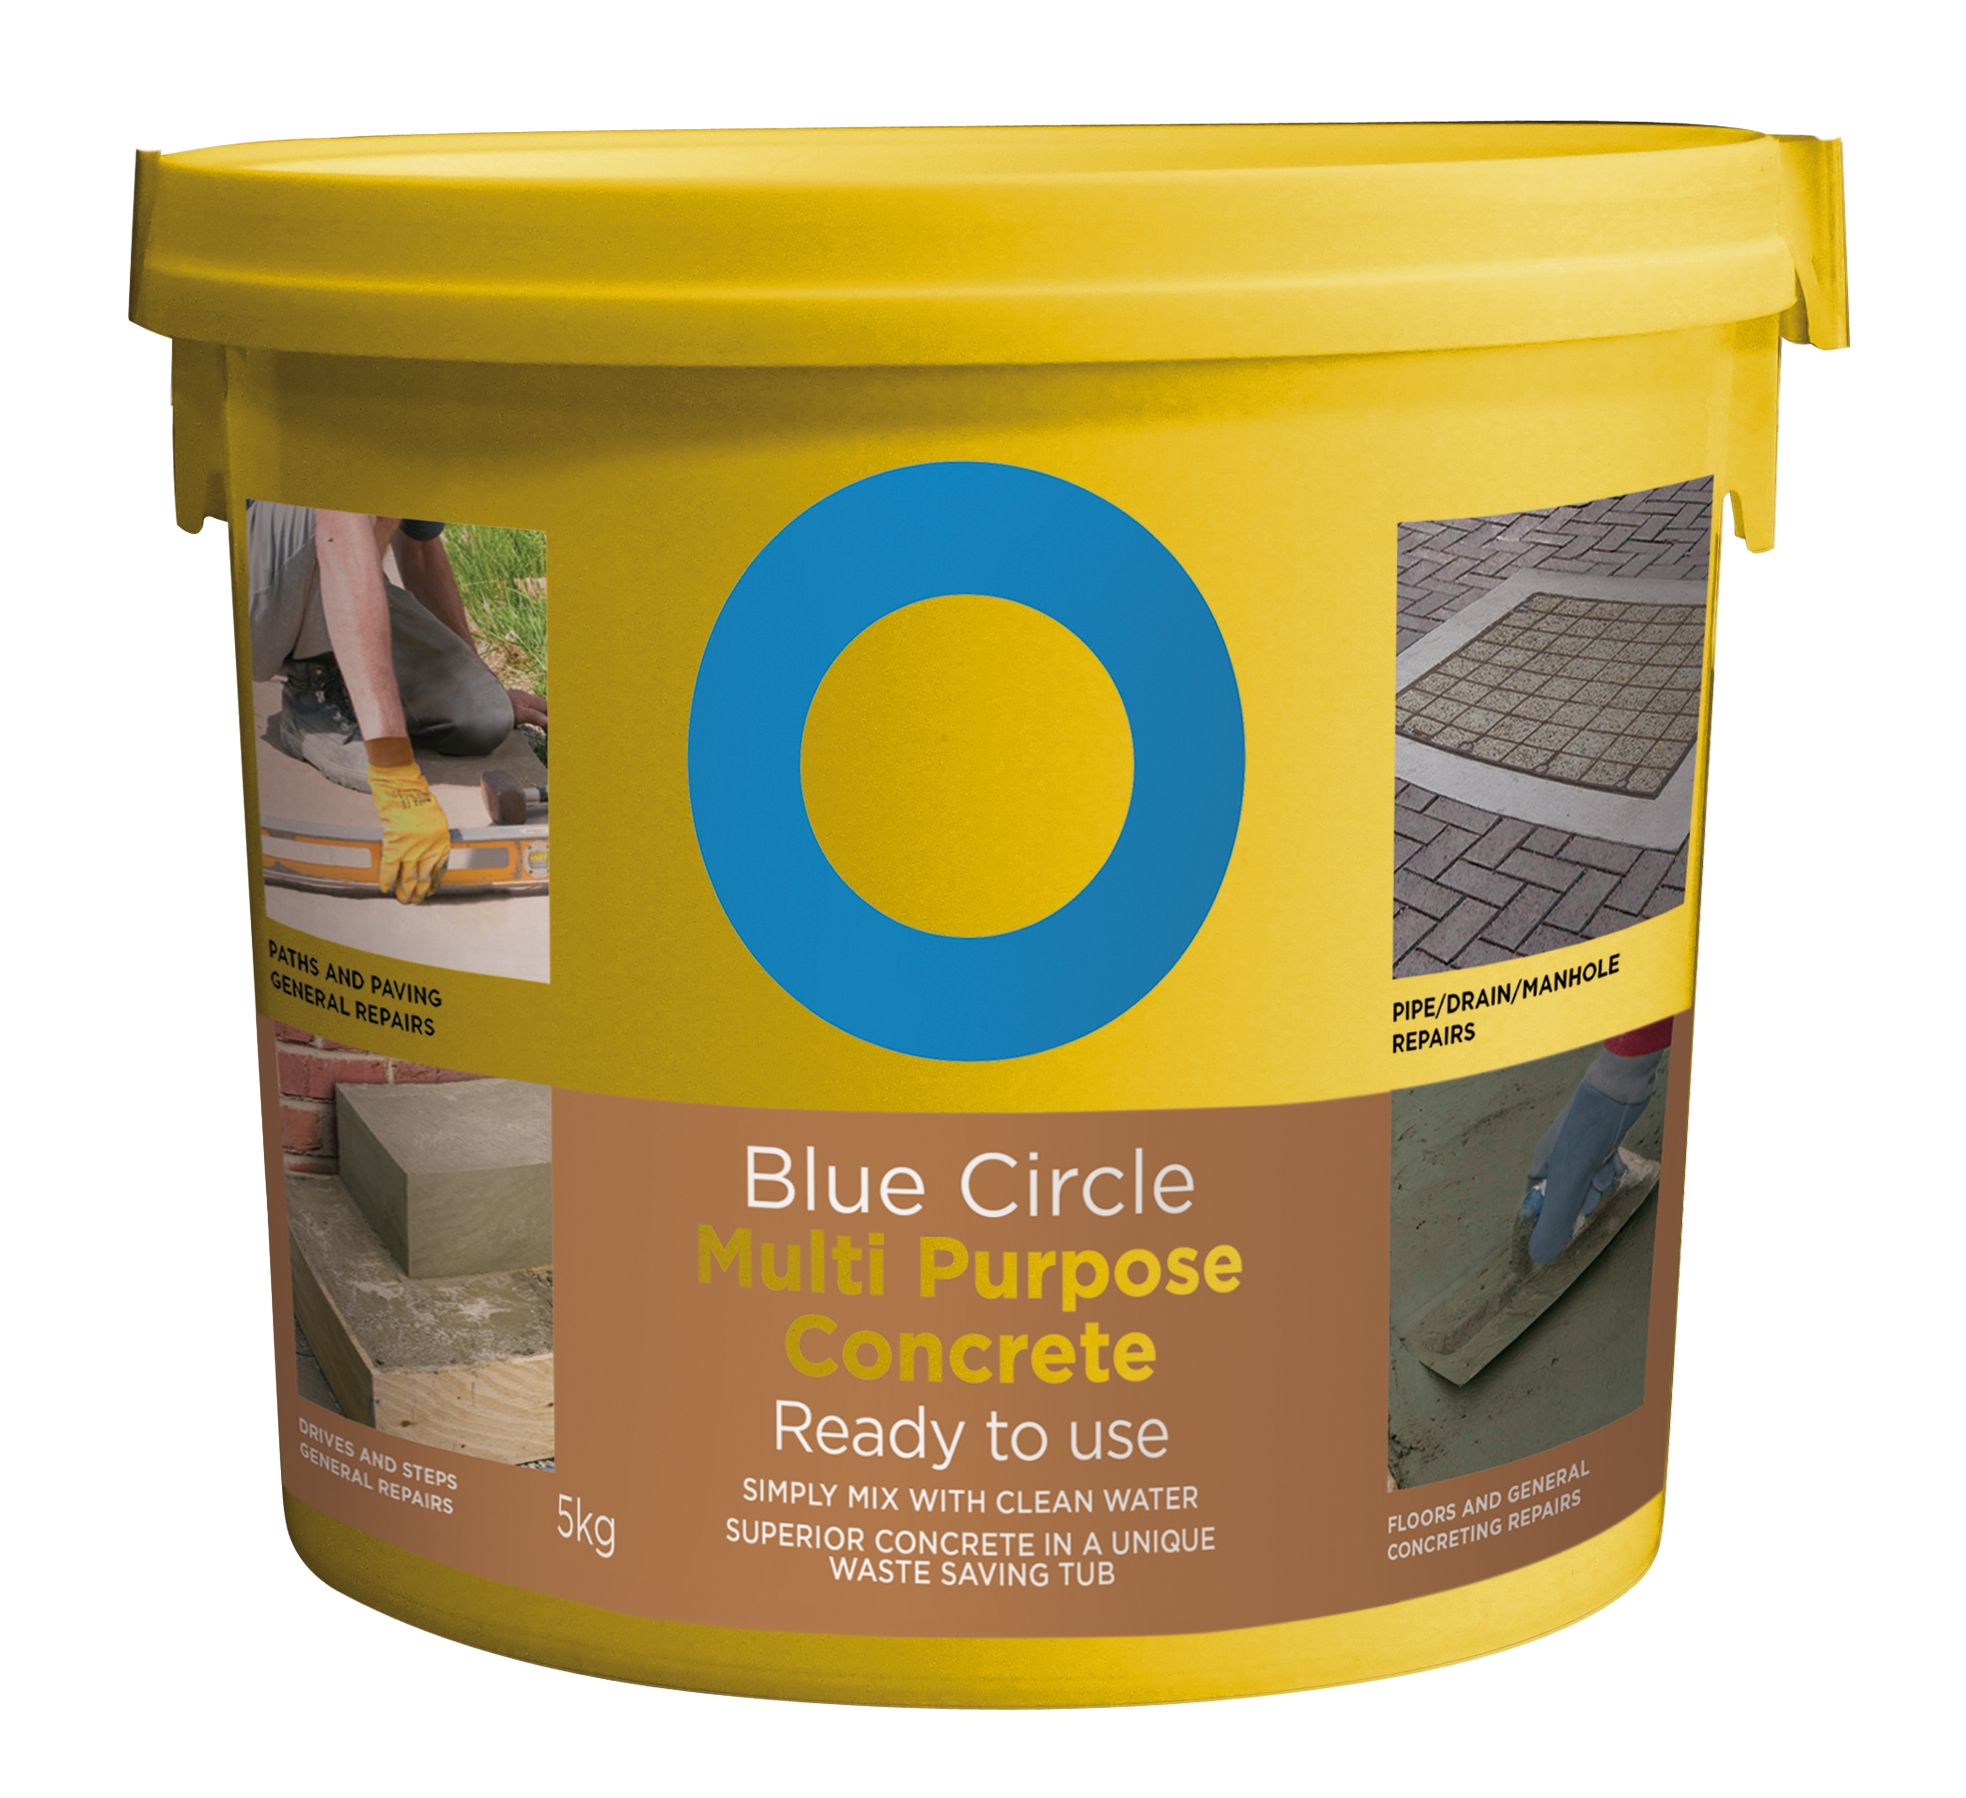 Blue Circle Multipurpose Concrete, 5kg Tub - Ready mixed